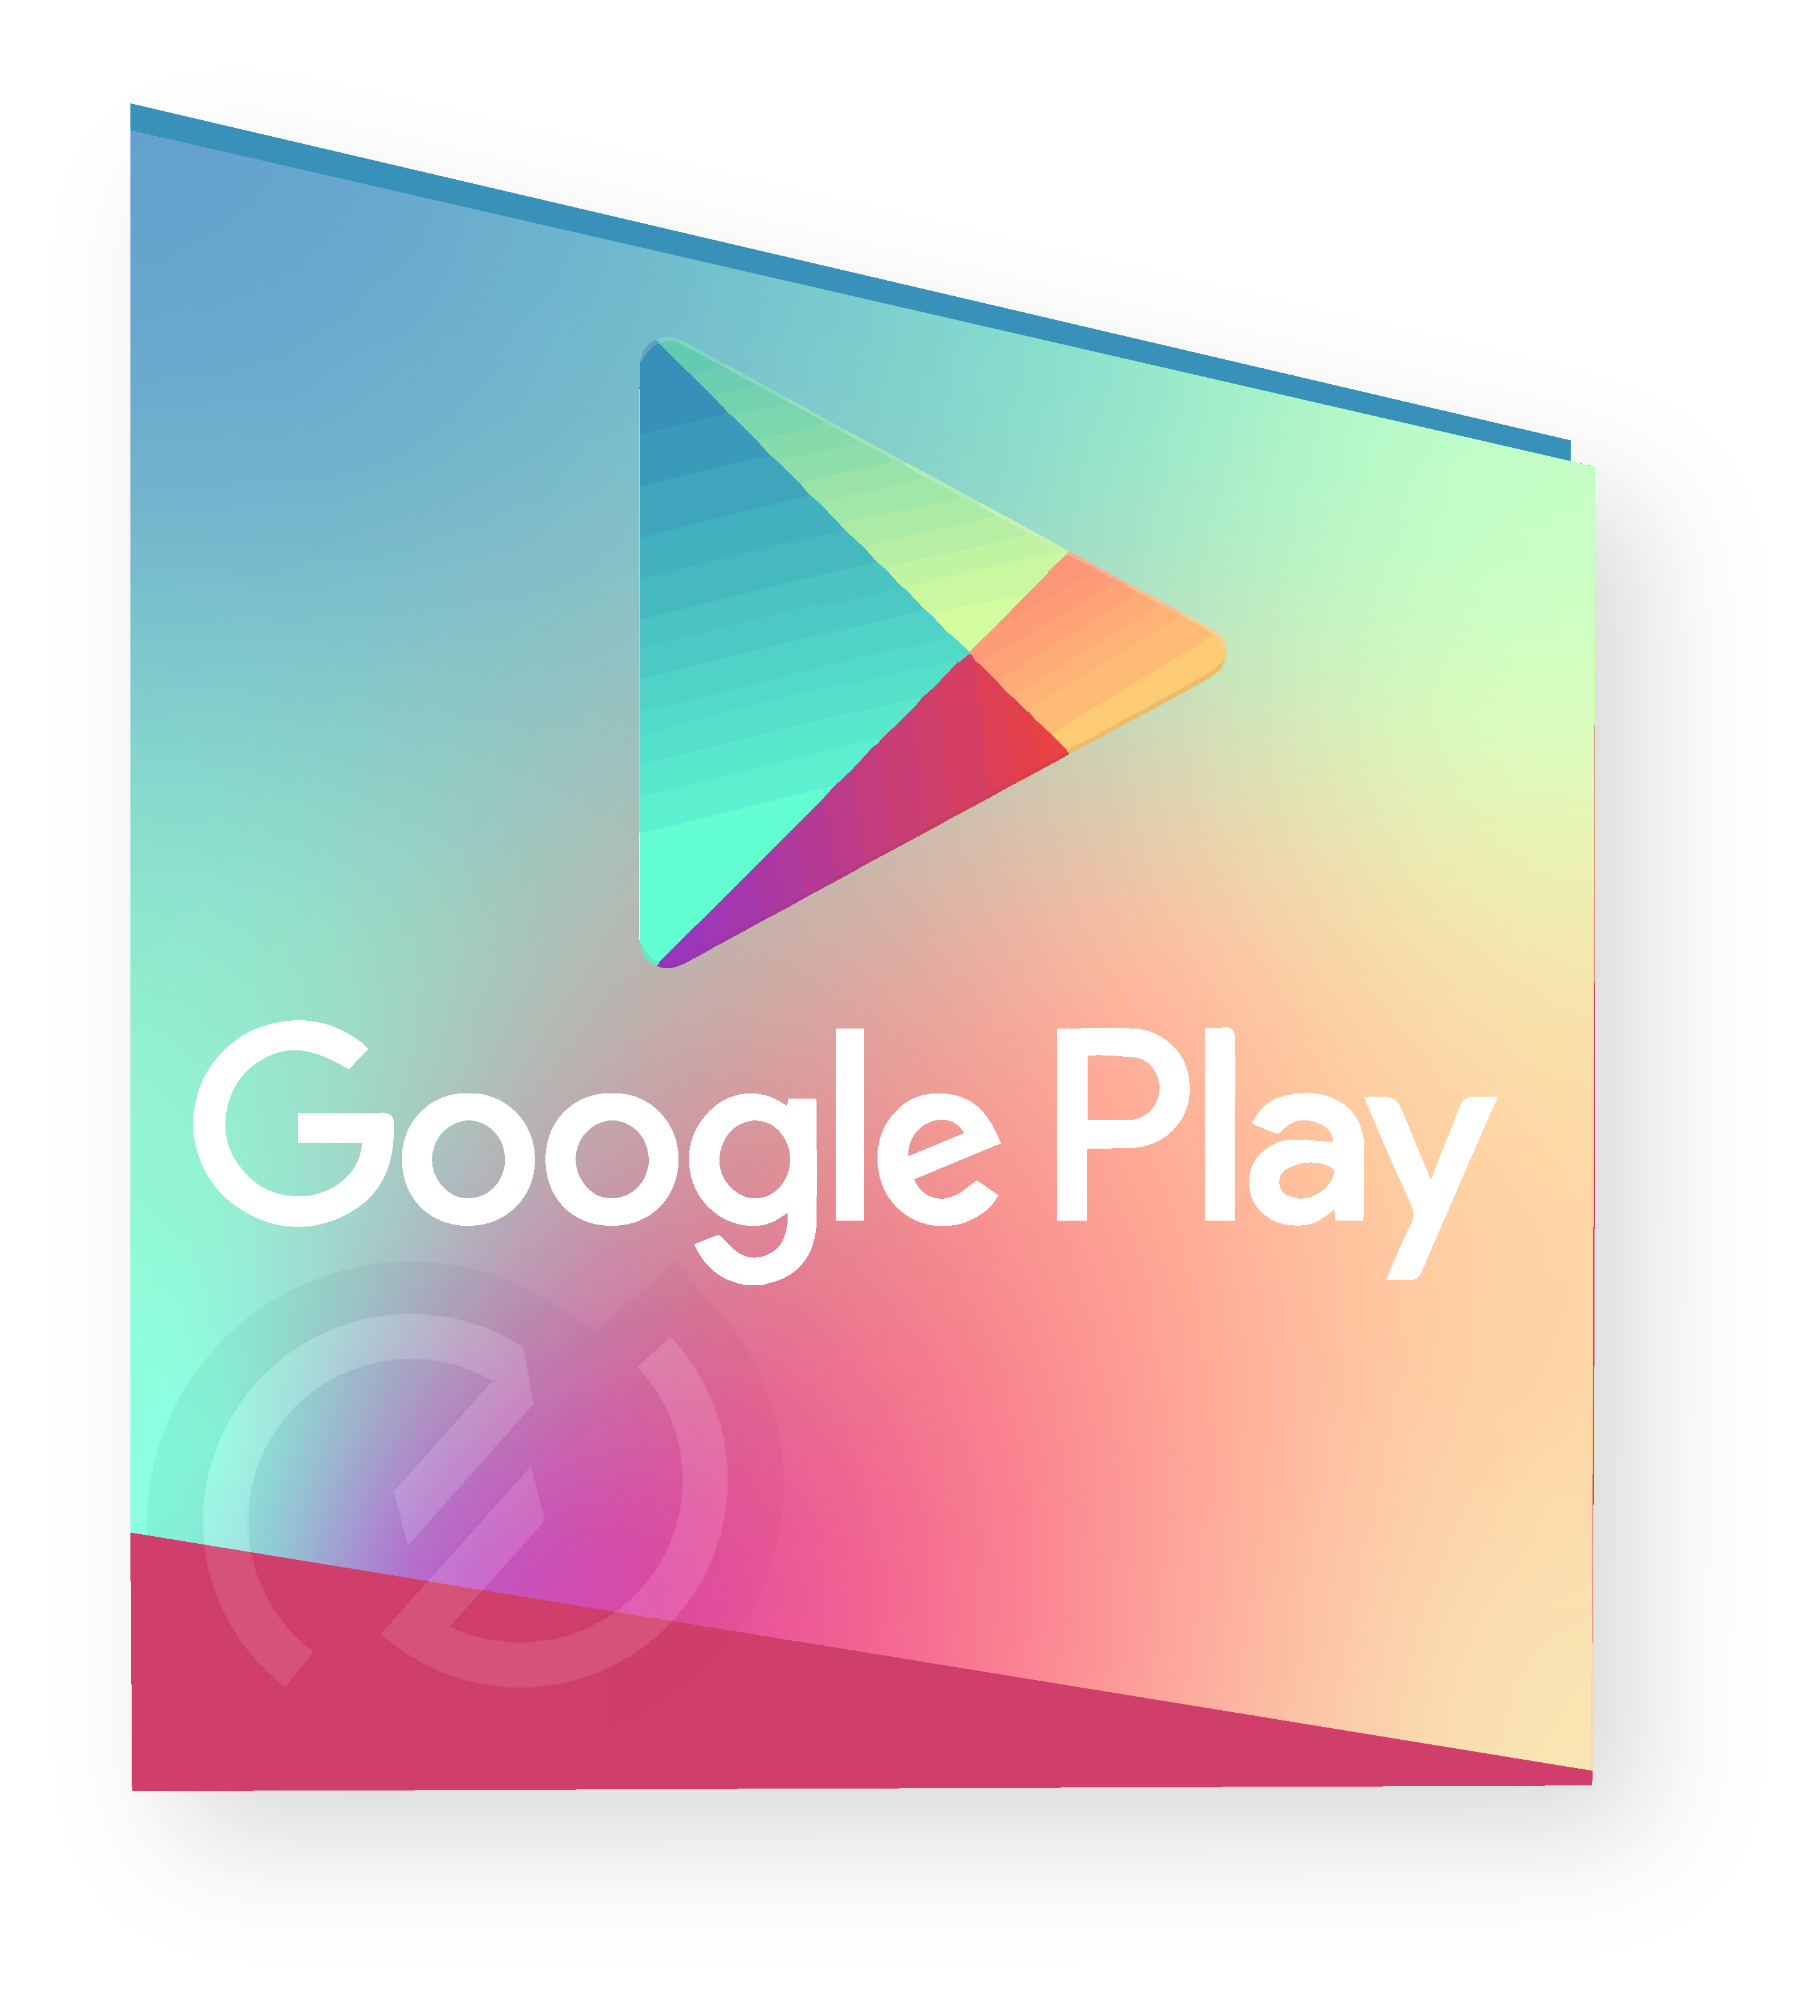 Image logo Google Play